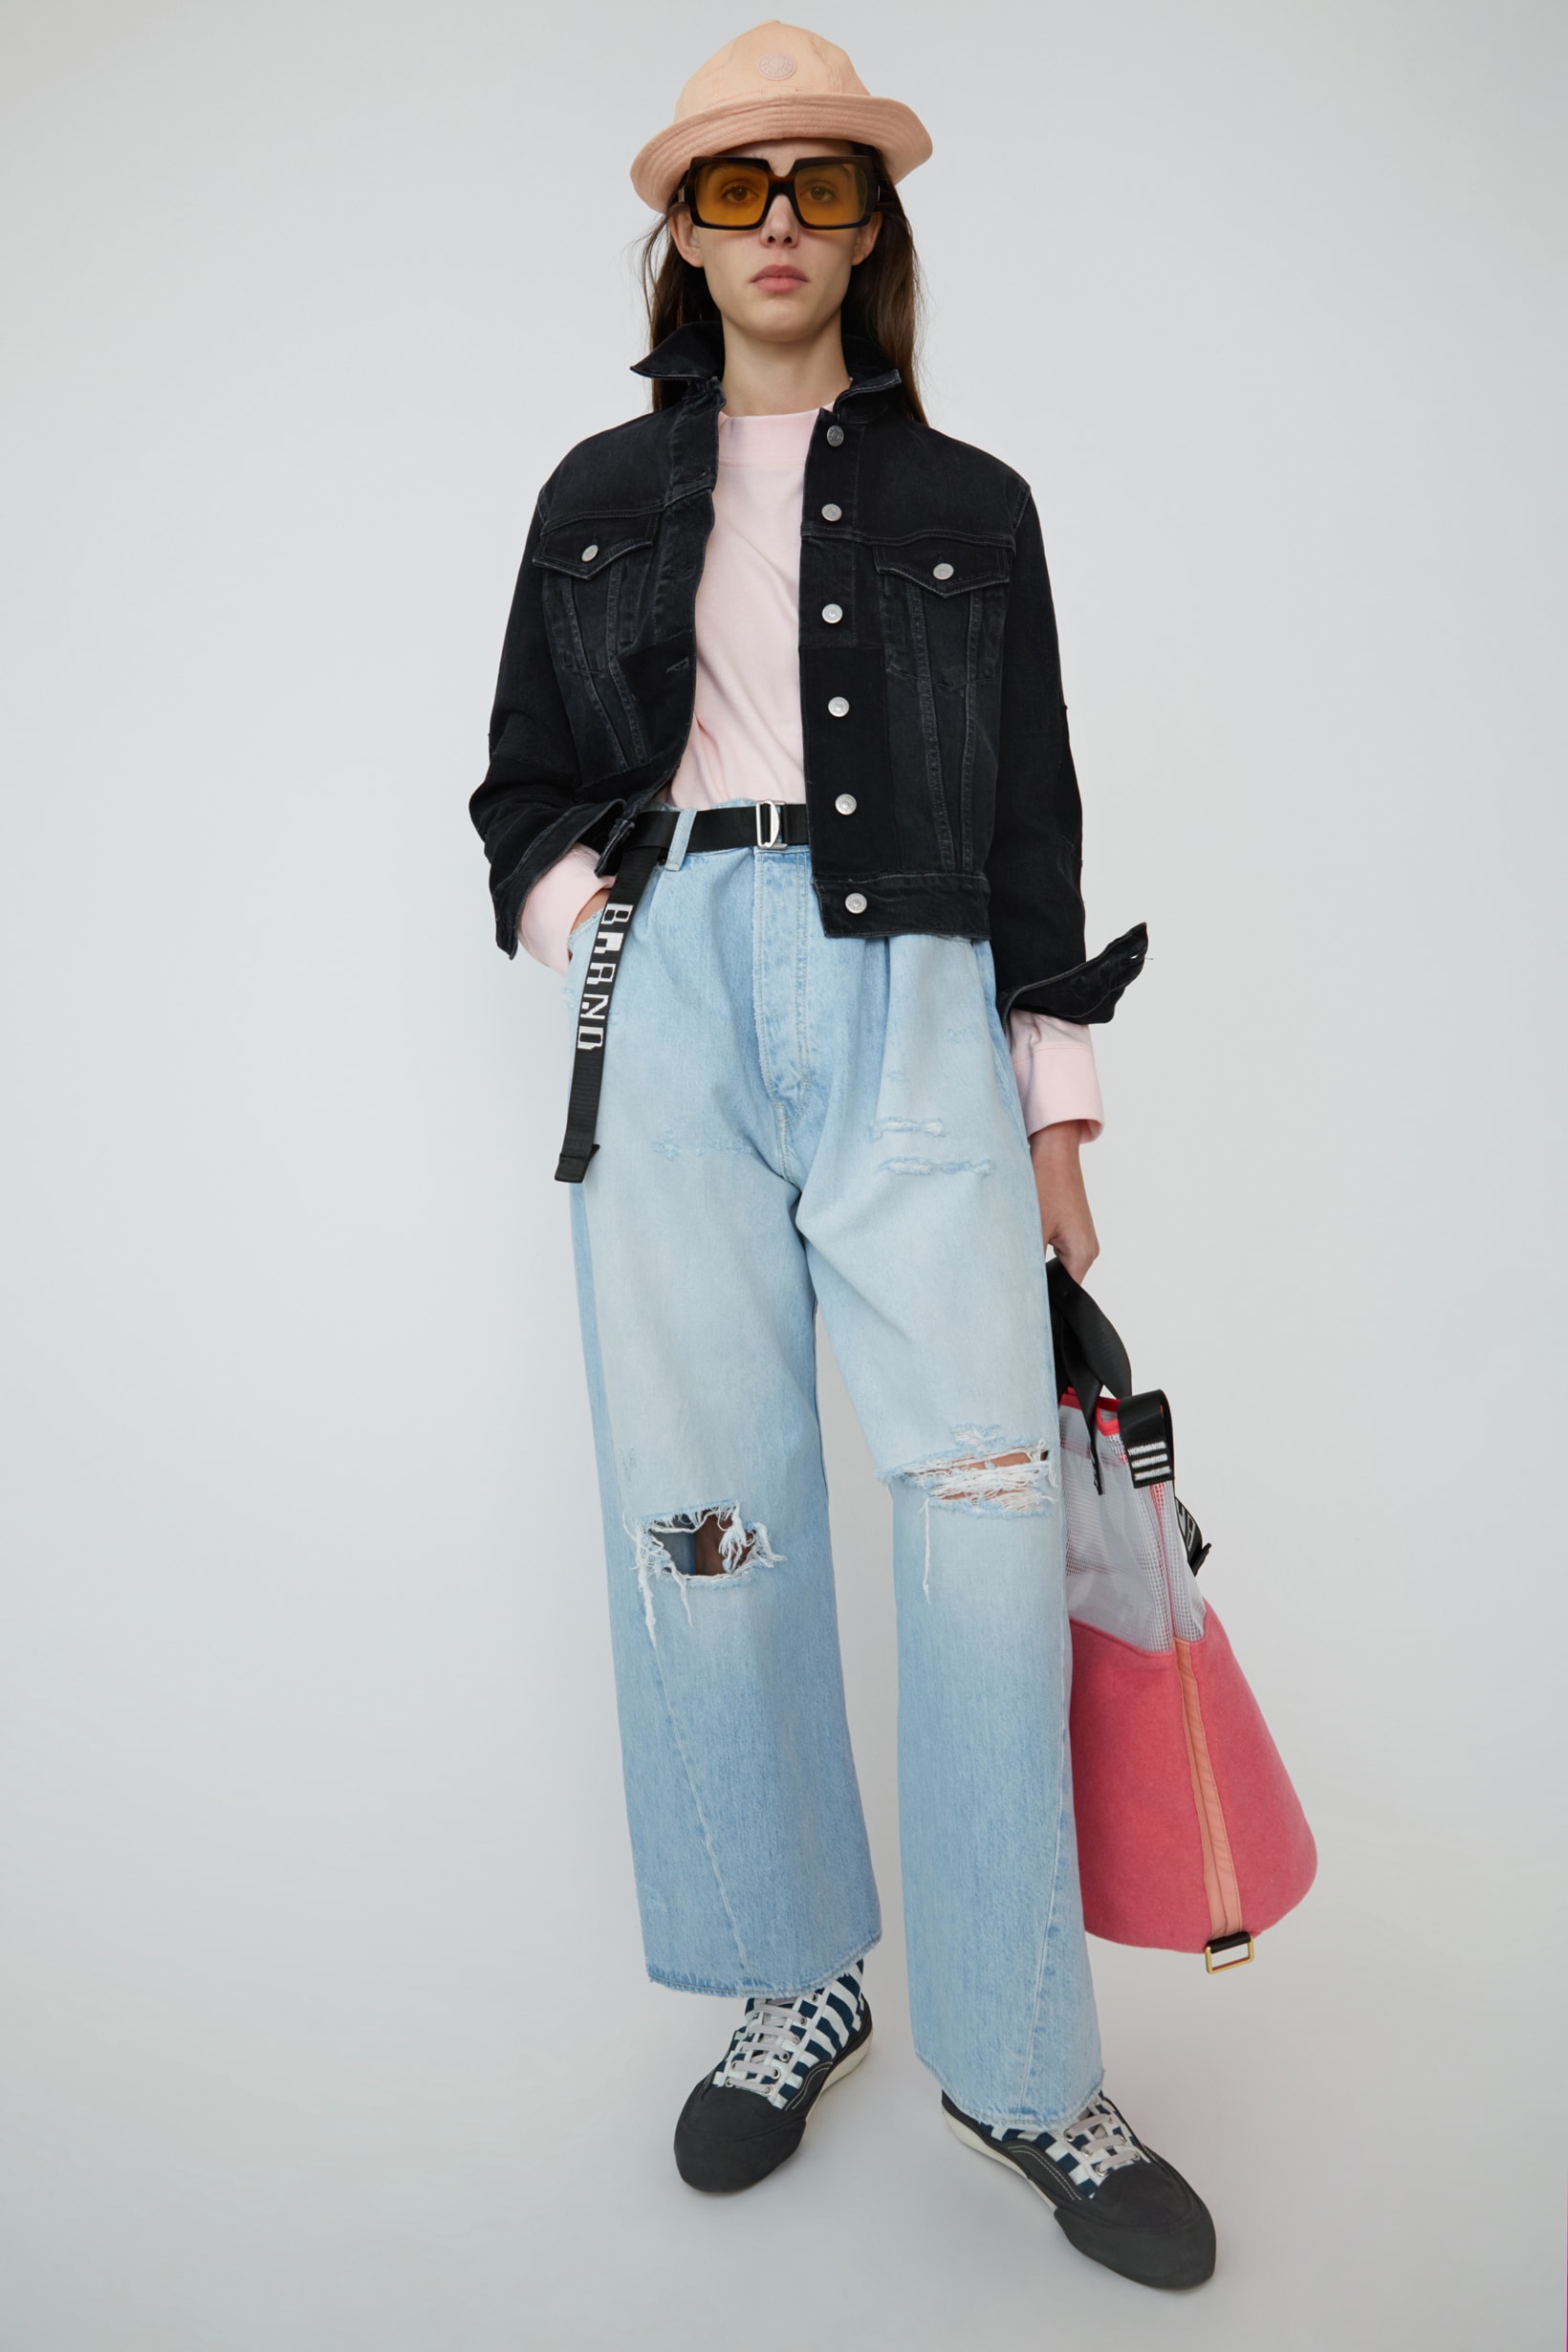 Acne Studios Spring Summer 2019 Denim Collection Shirt Pink Jeans Blue